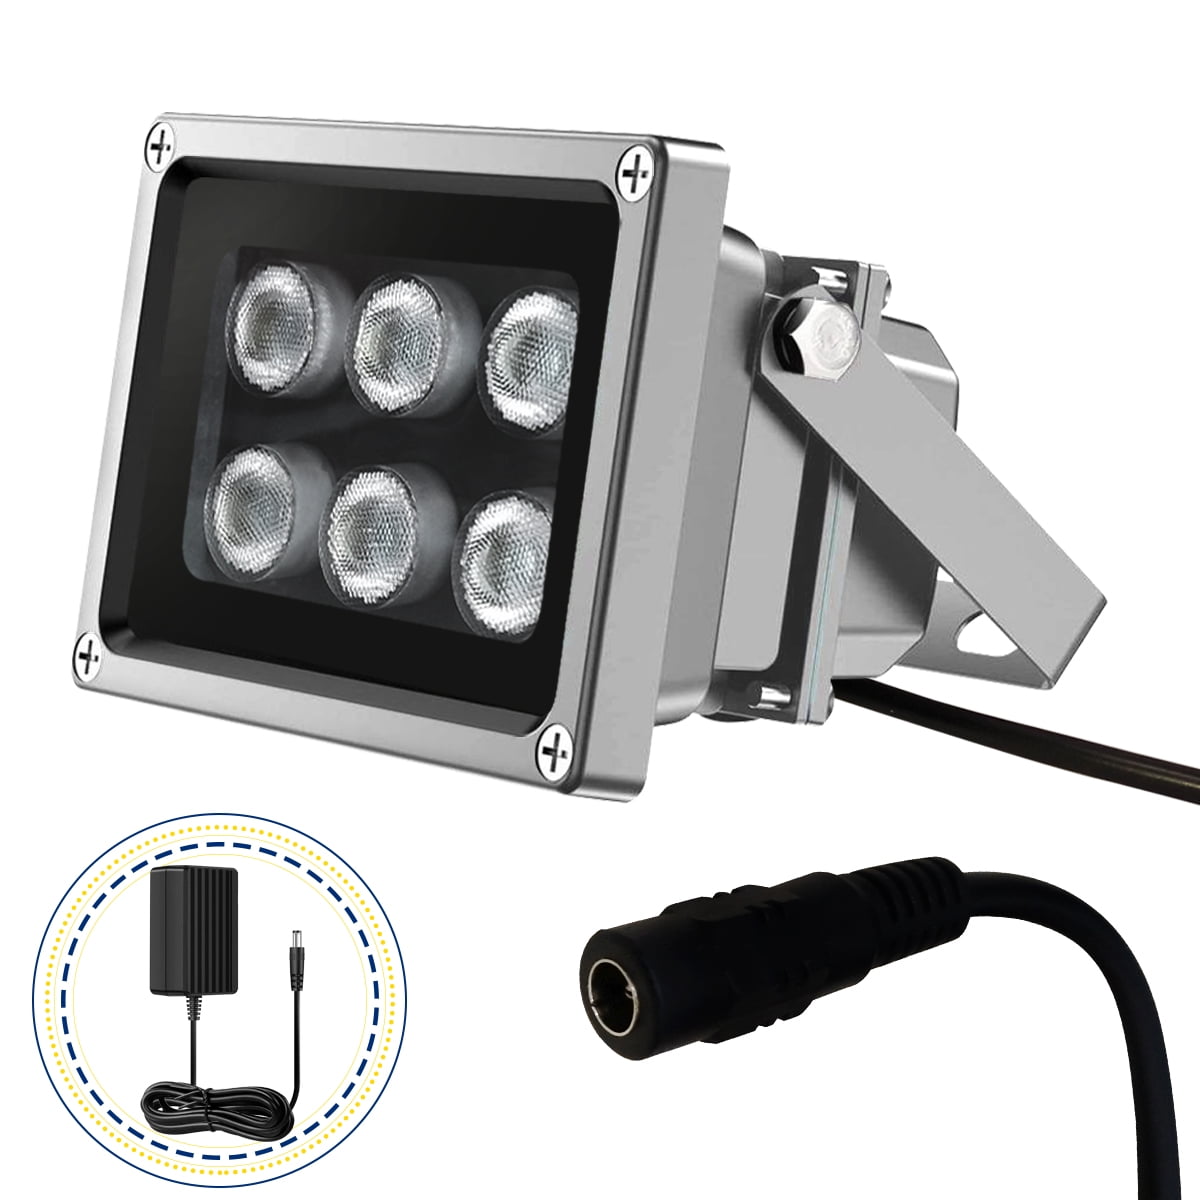 4 LED Infrared Night Vision IR Light Illuminator Lamp Floodlight for CCTV DC 12V 